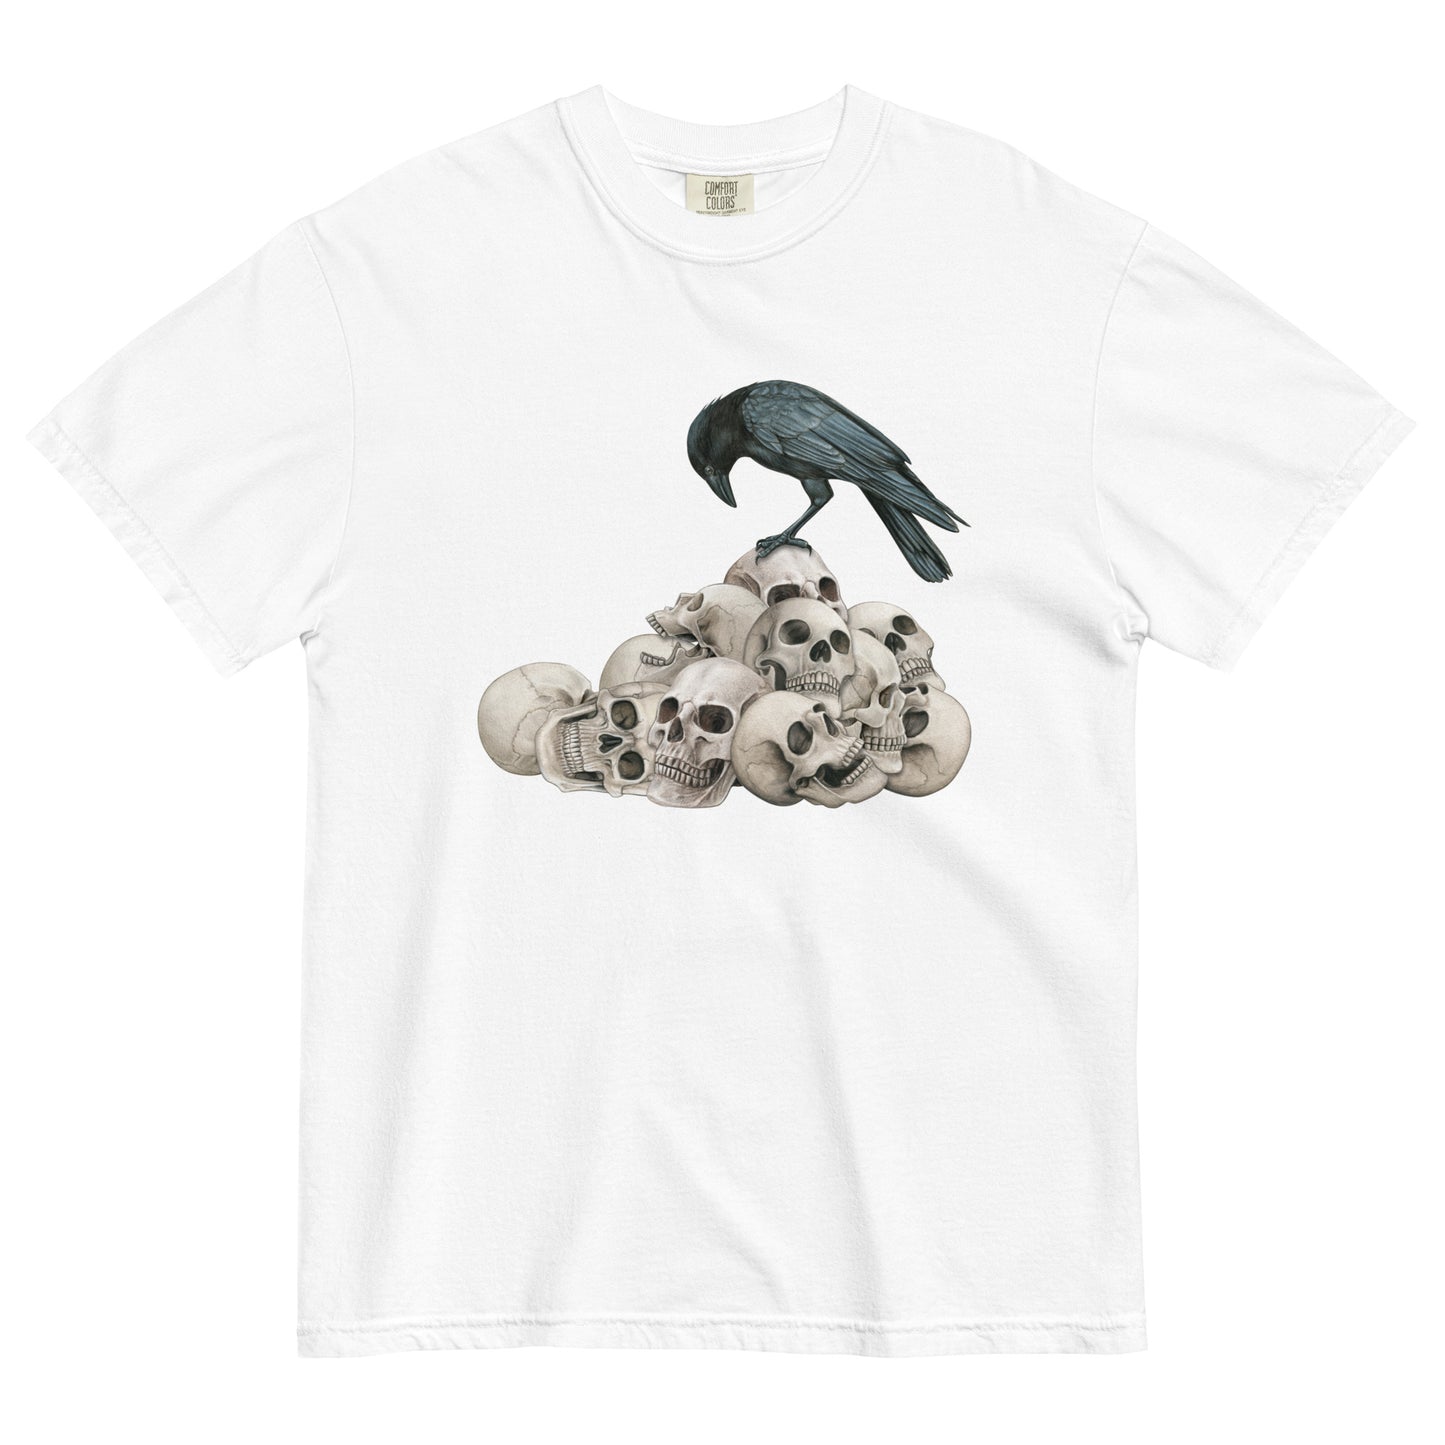 Raven and Skulls t-shirt